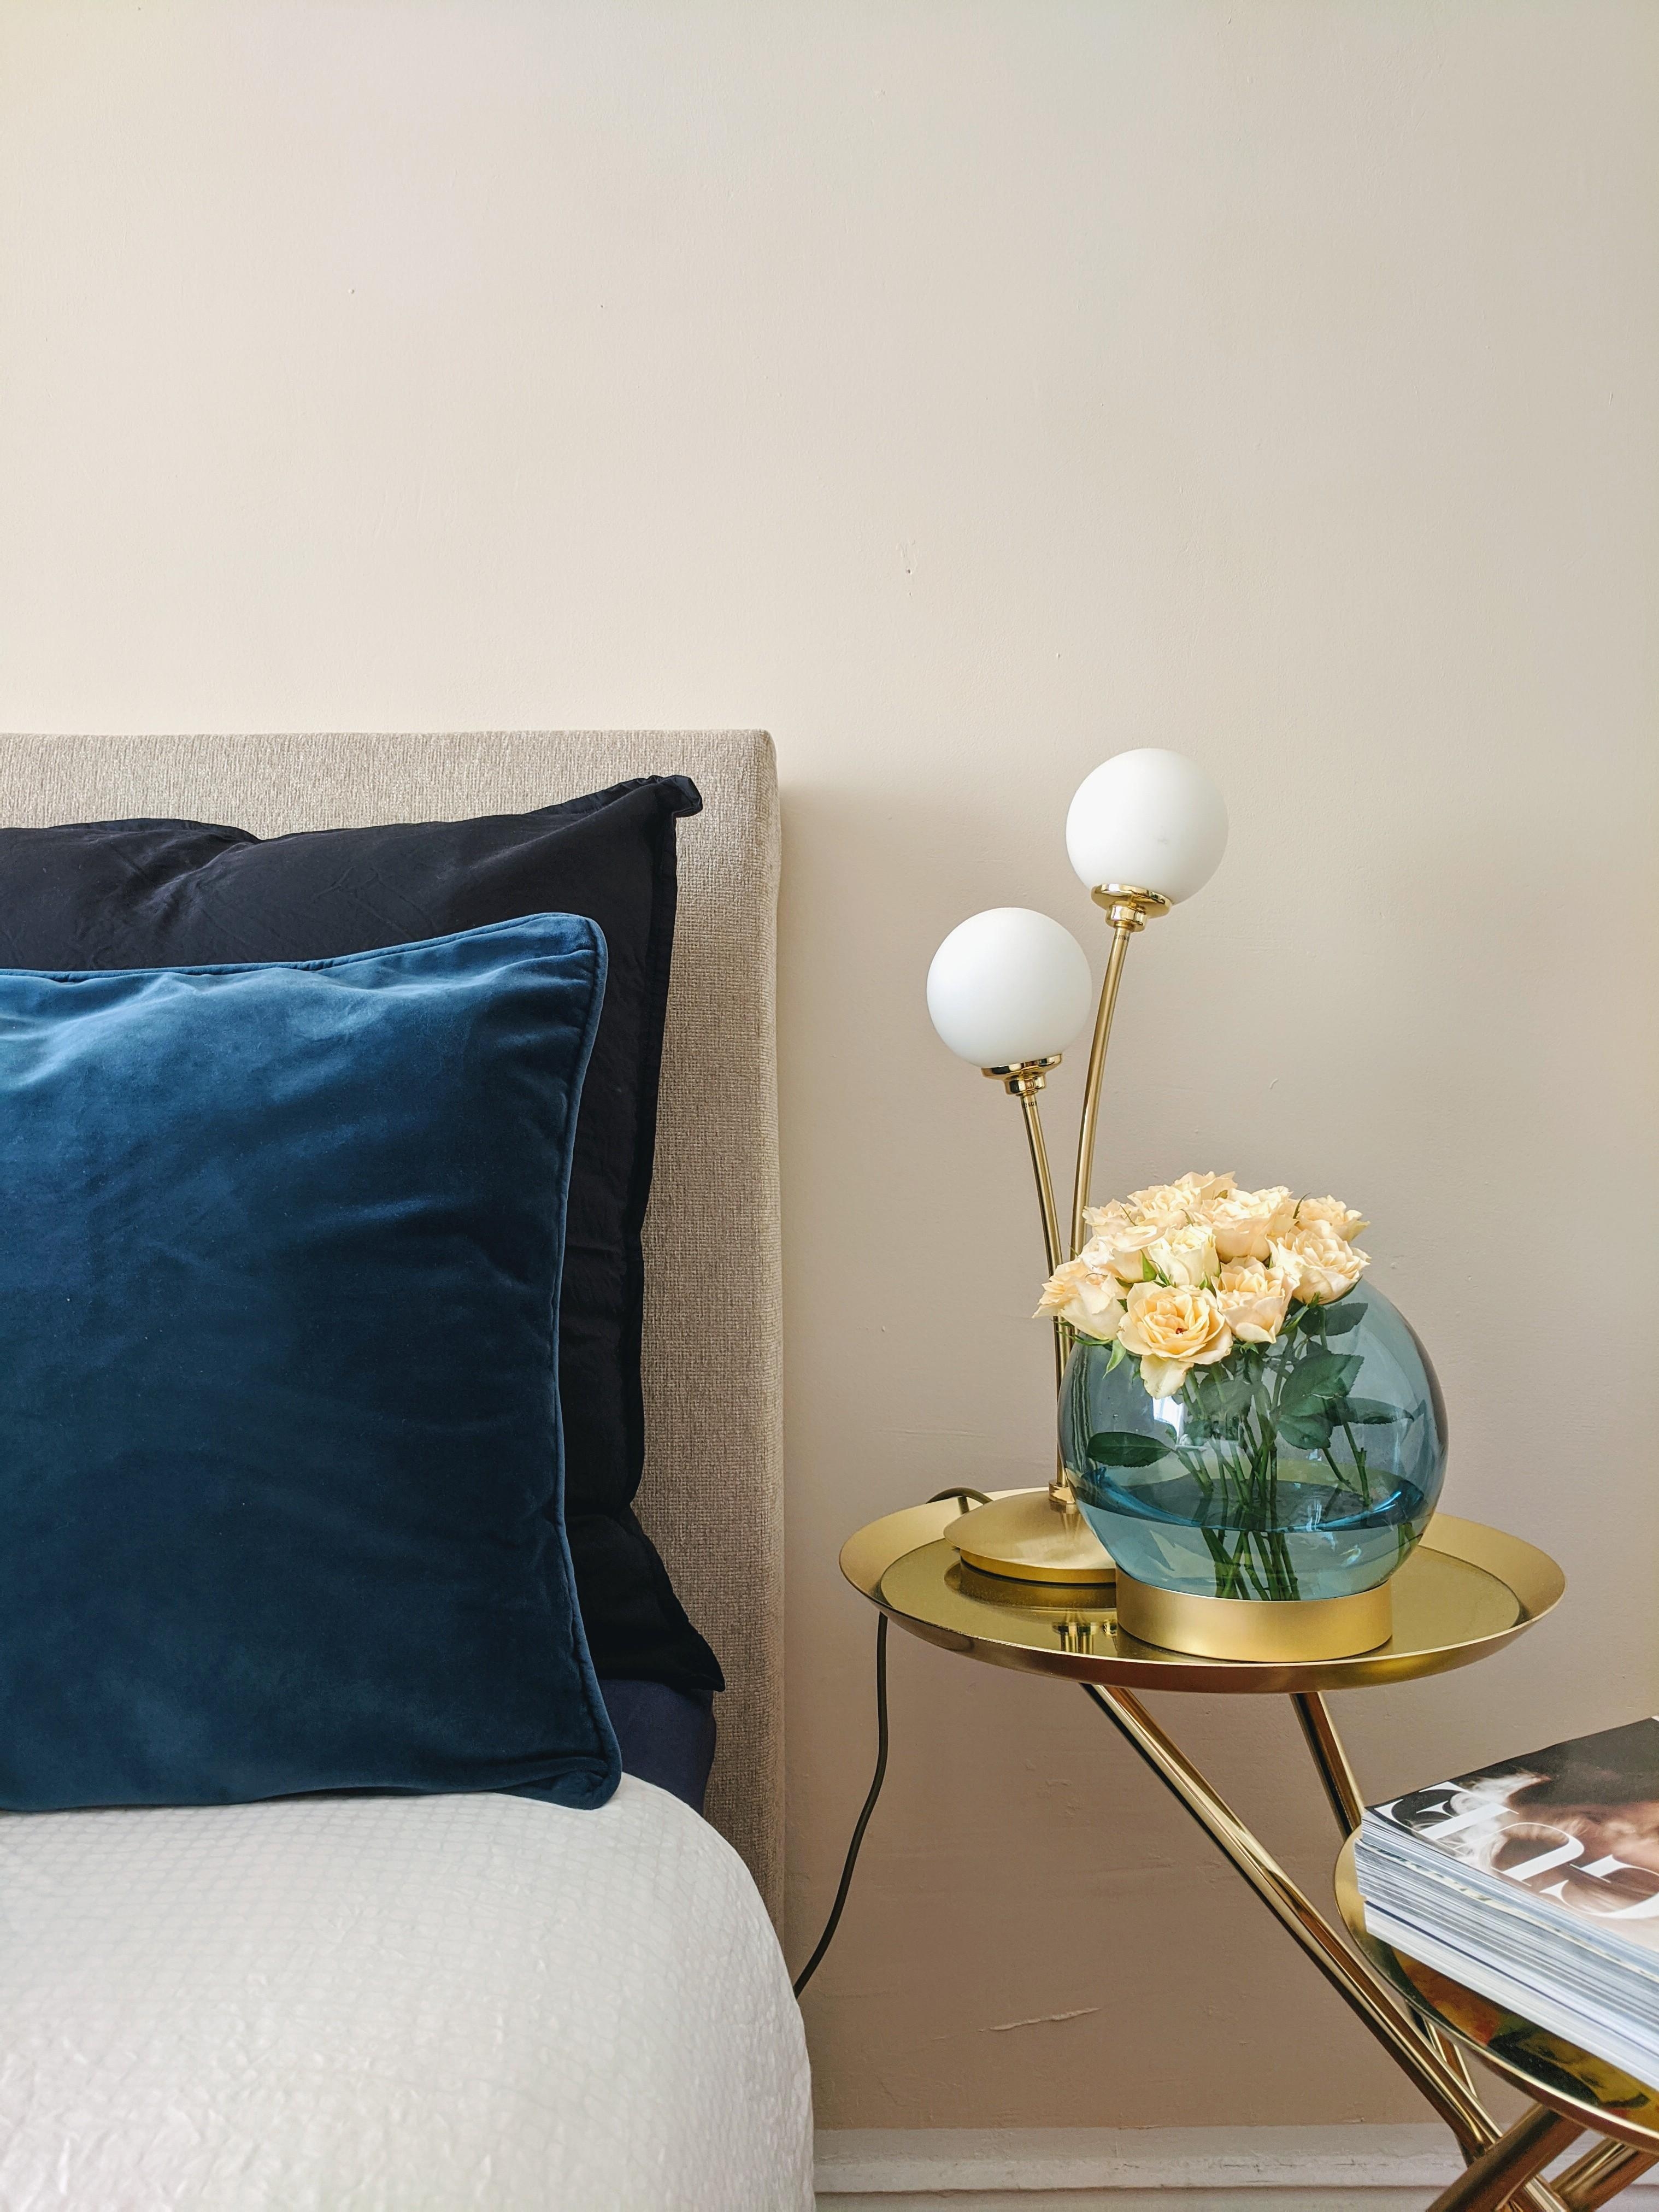 Heute schon blau gemacht? #blue #pillowlover #bedroom #freshbedding #freshflowers #homestory #zuhause #homesweethome